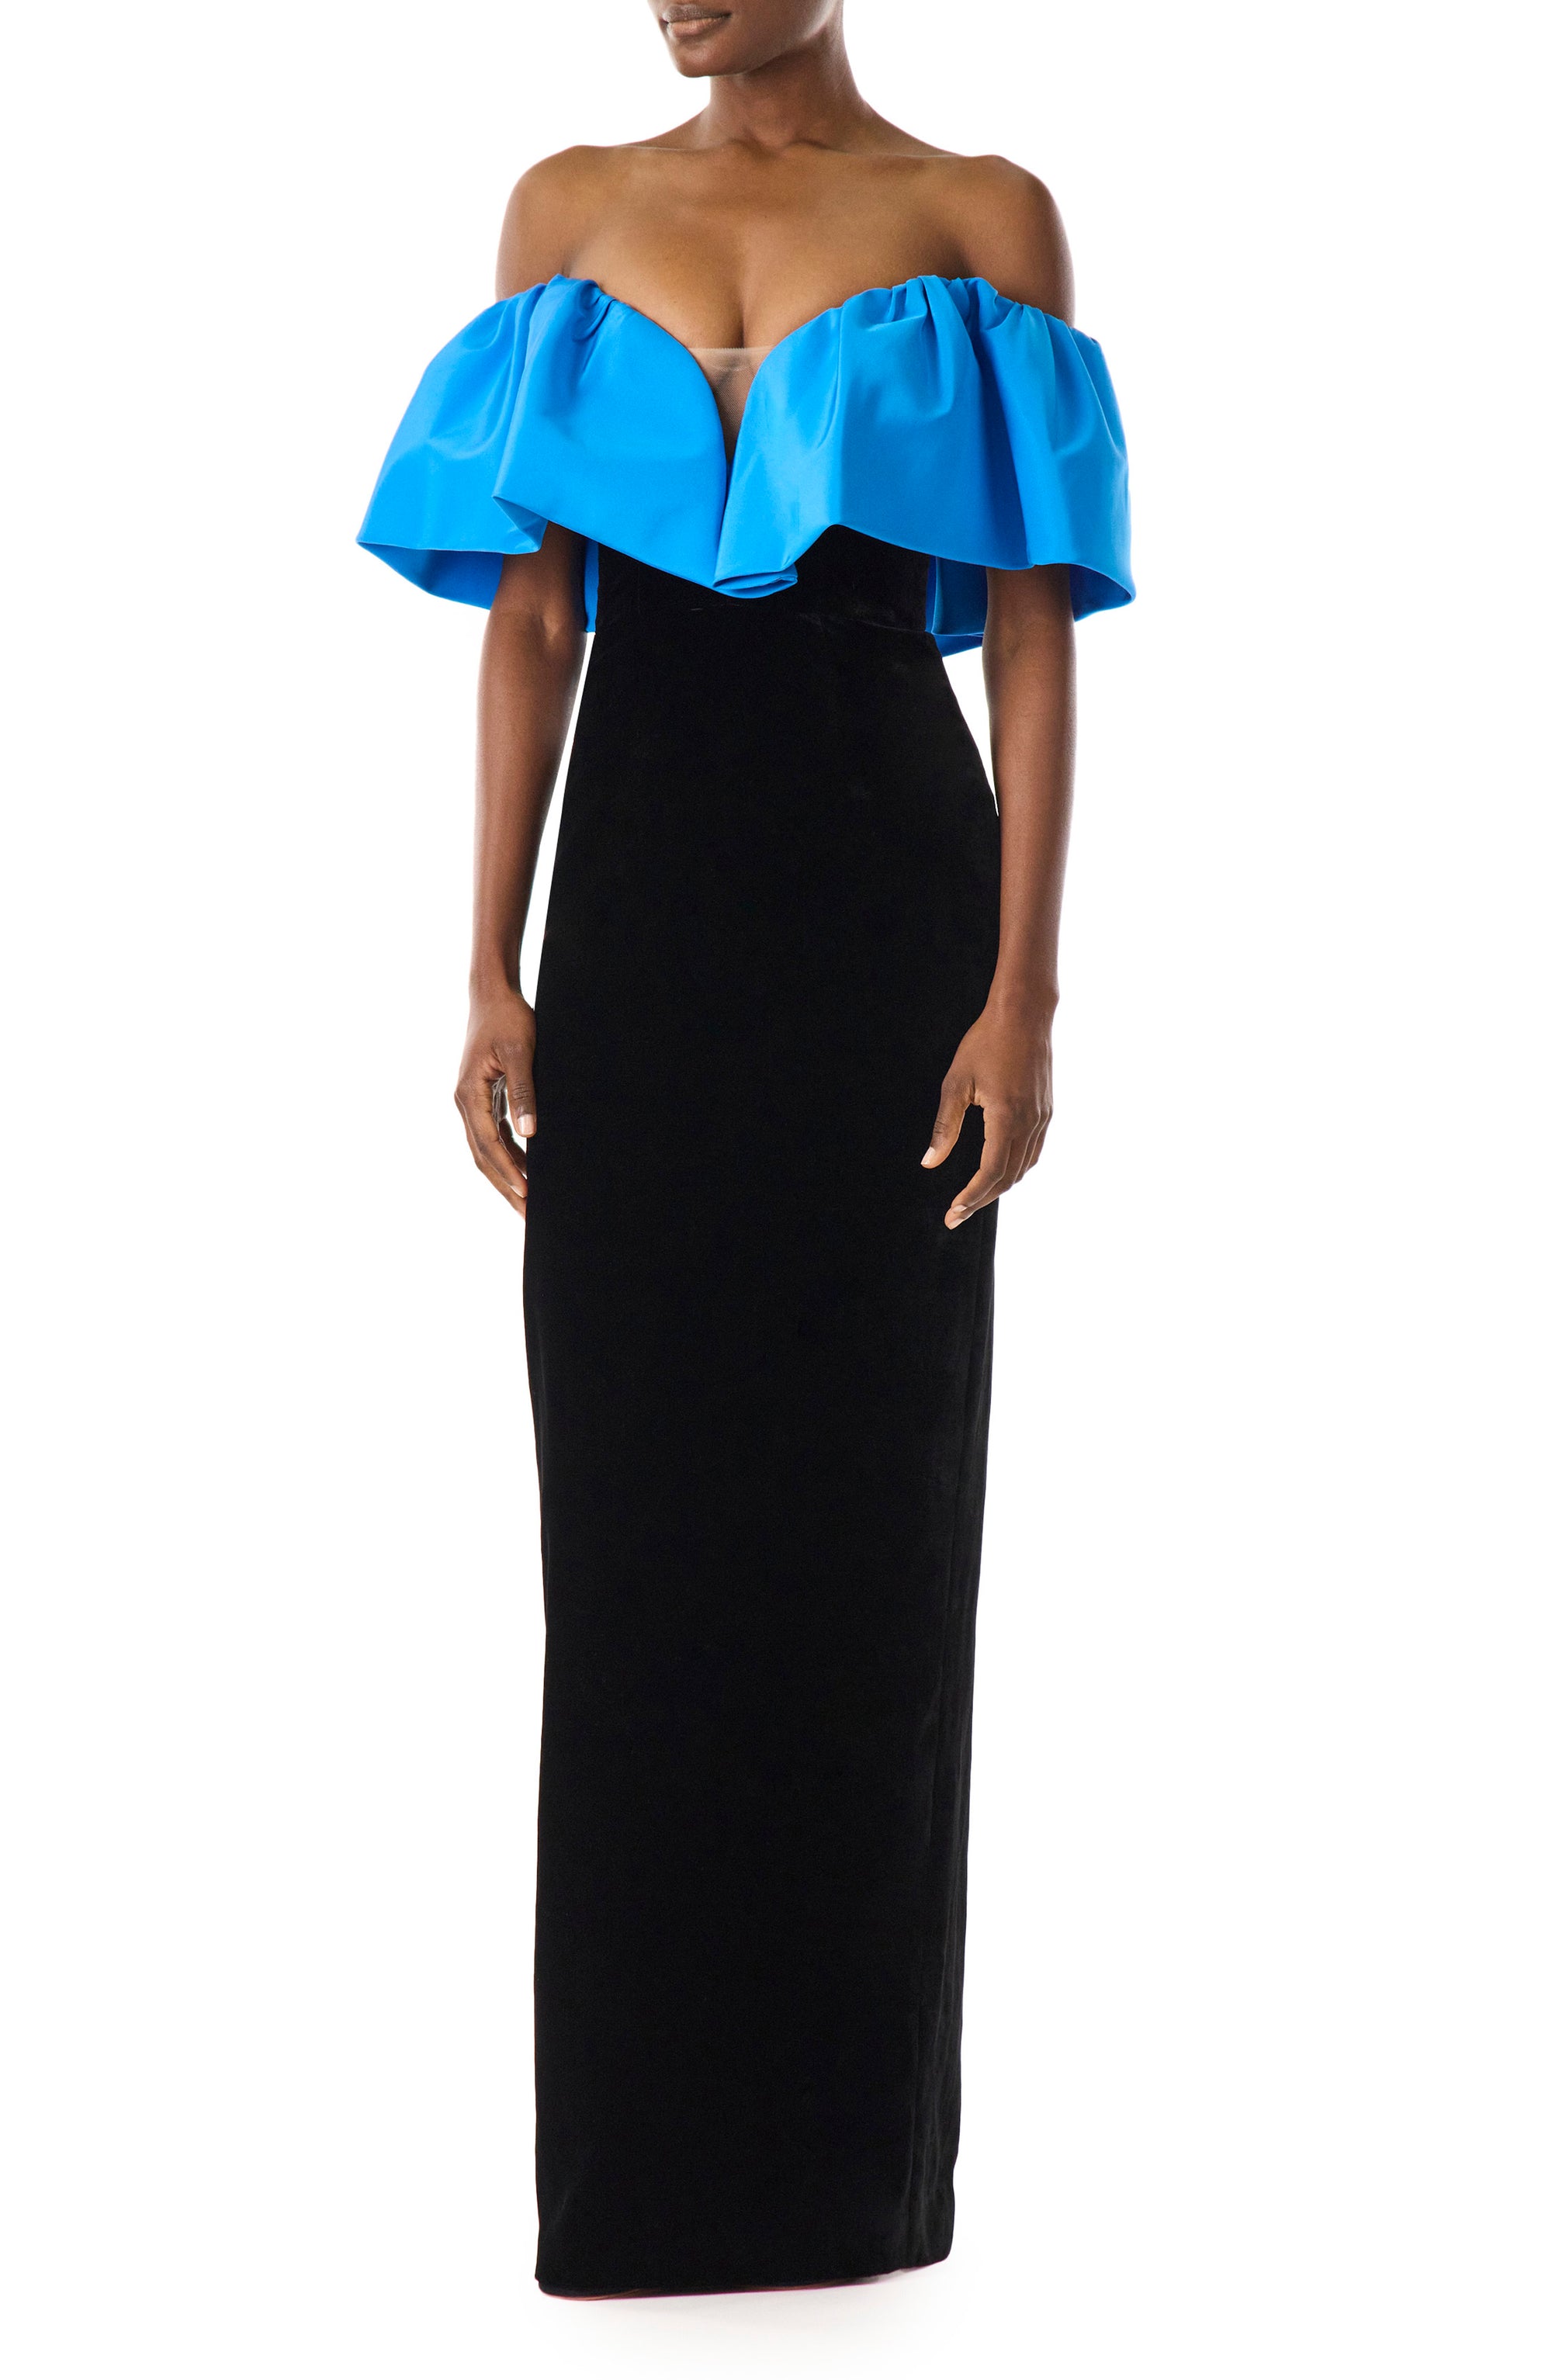 Monique Lhuillier off the shoulder gown in cobalt blue faille bodice and noir velvet skirt.